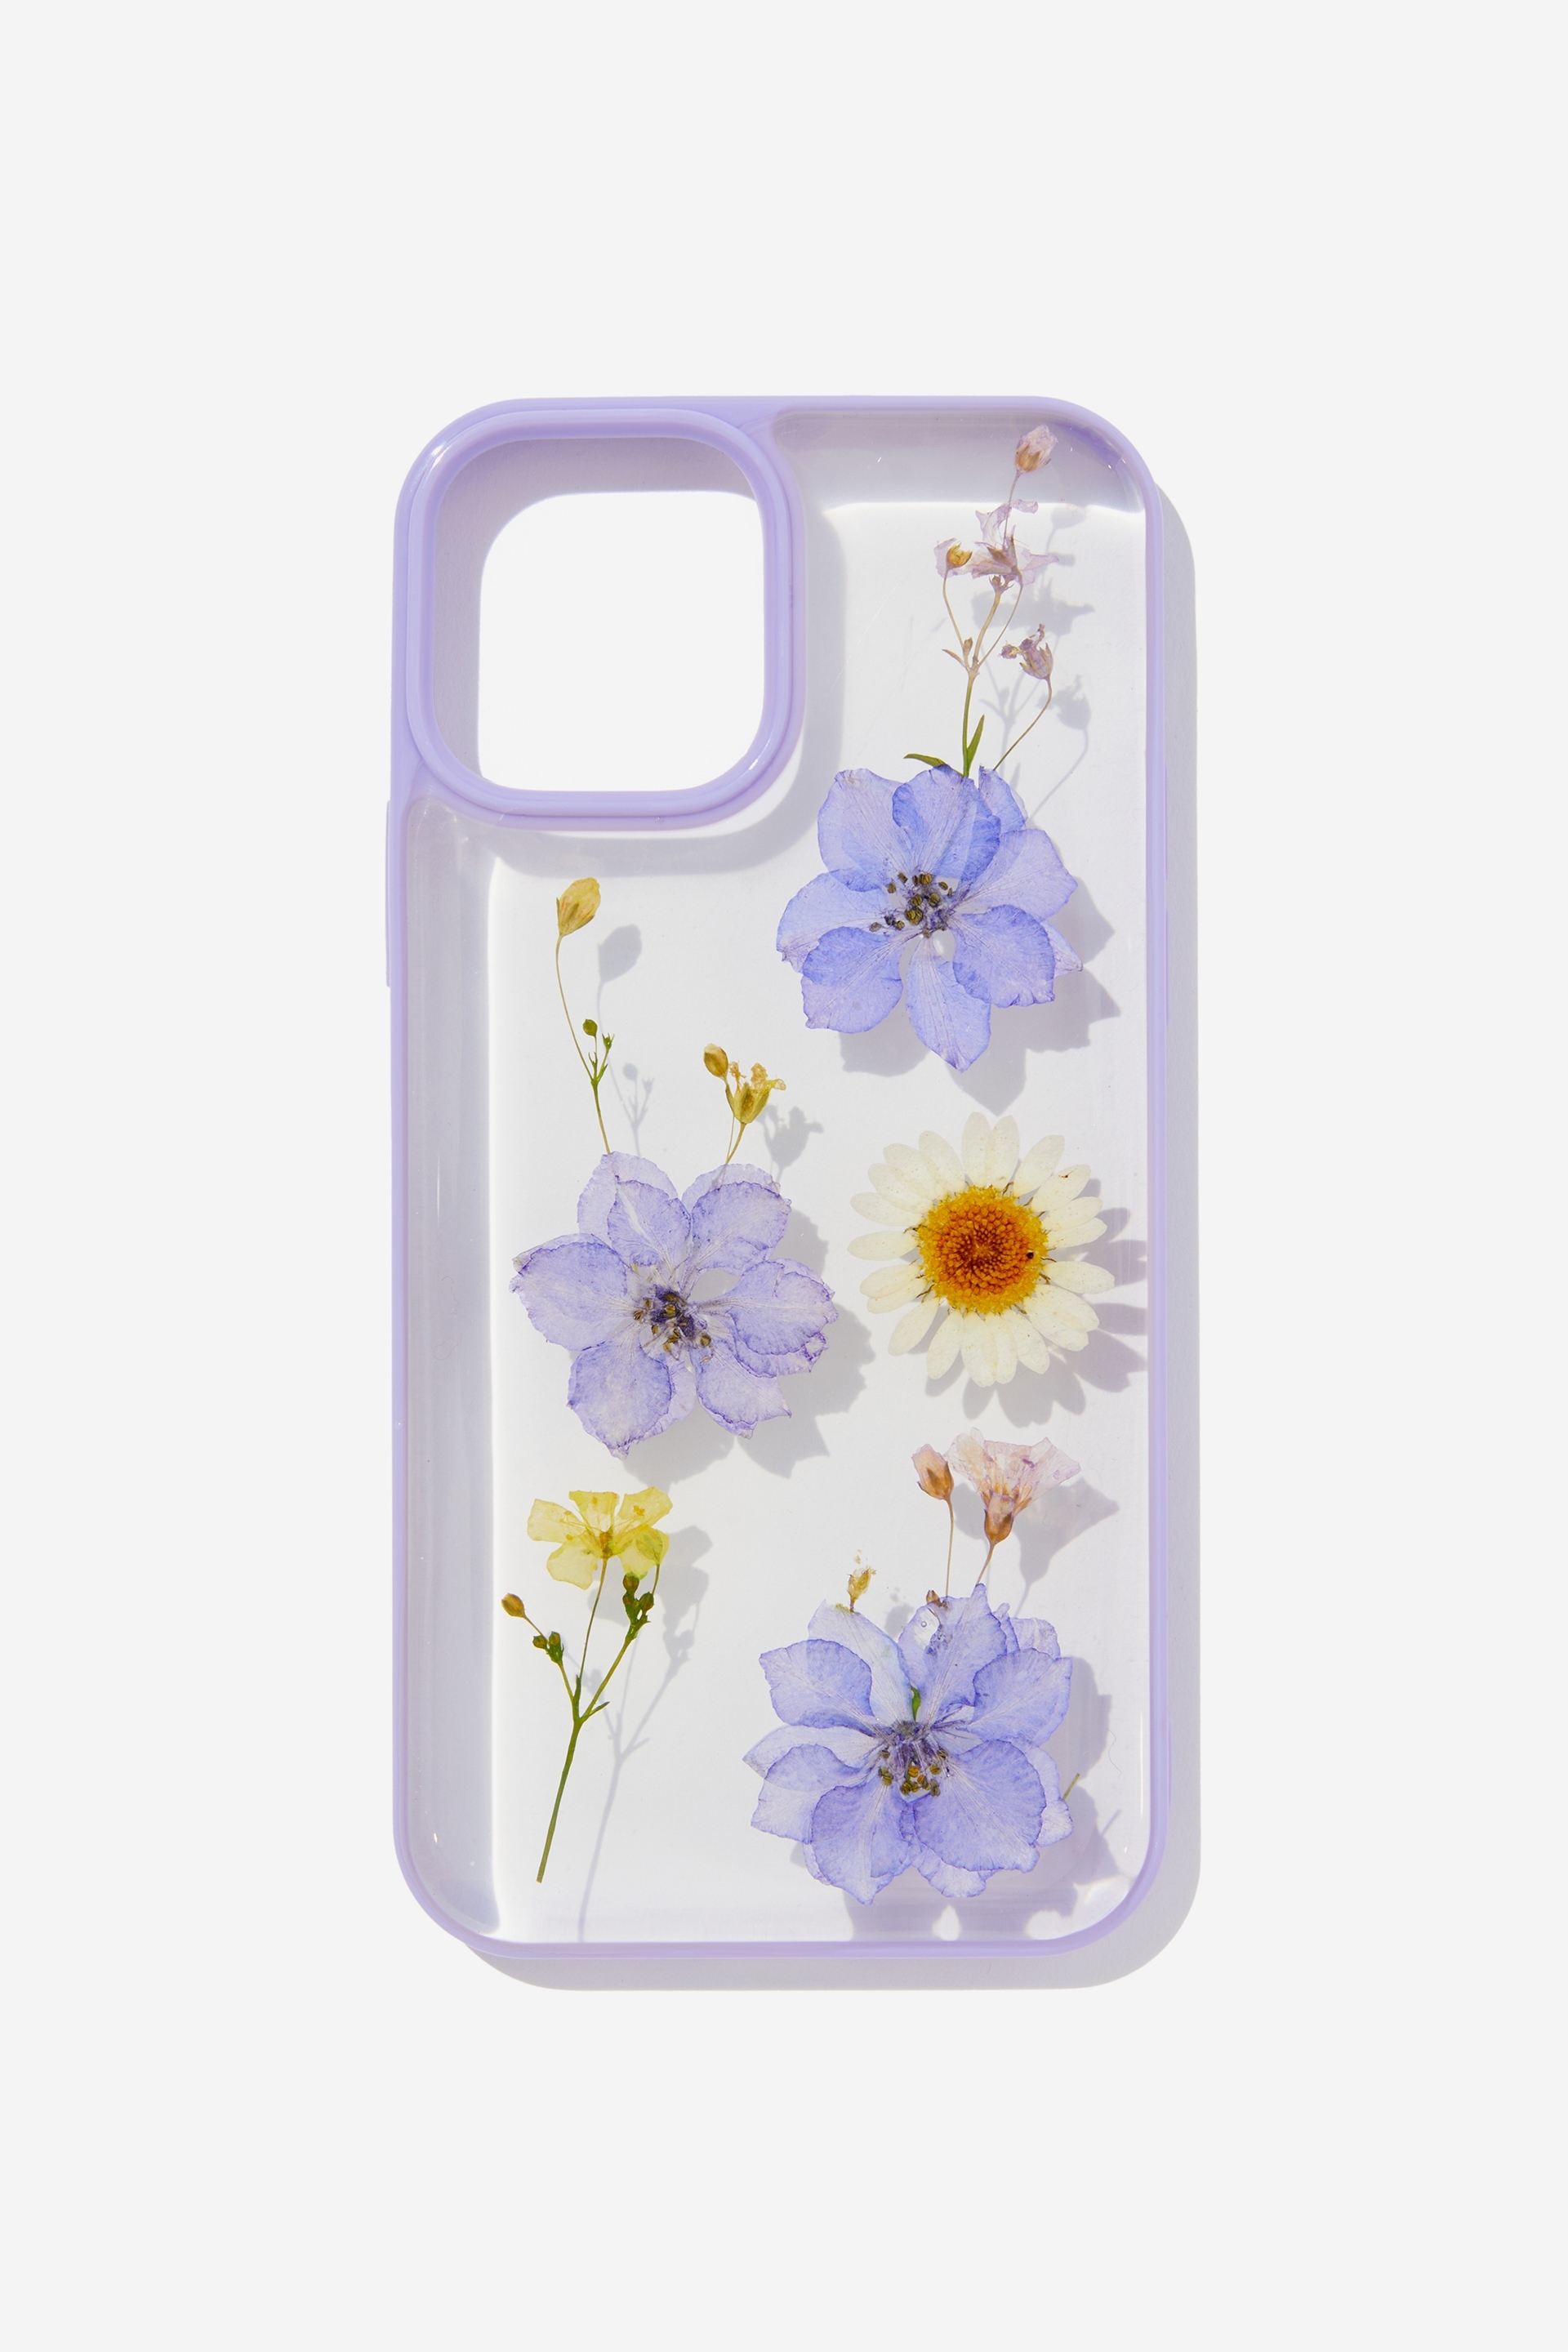 Typo - Protective Phone Case Iphone 12, 12 Pro - Trapped purple daisy / purple